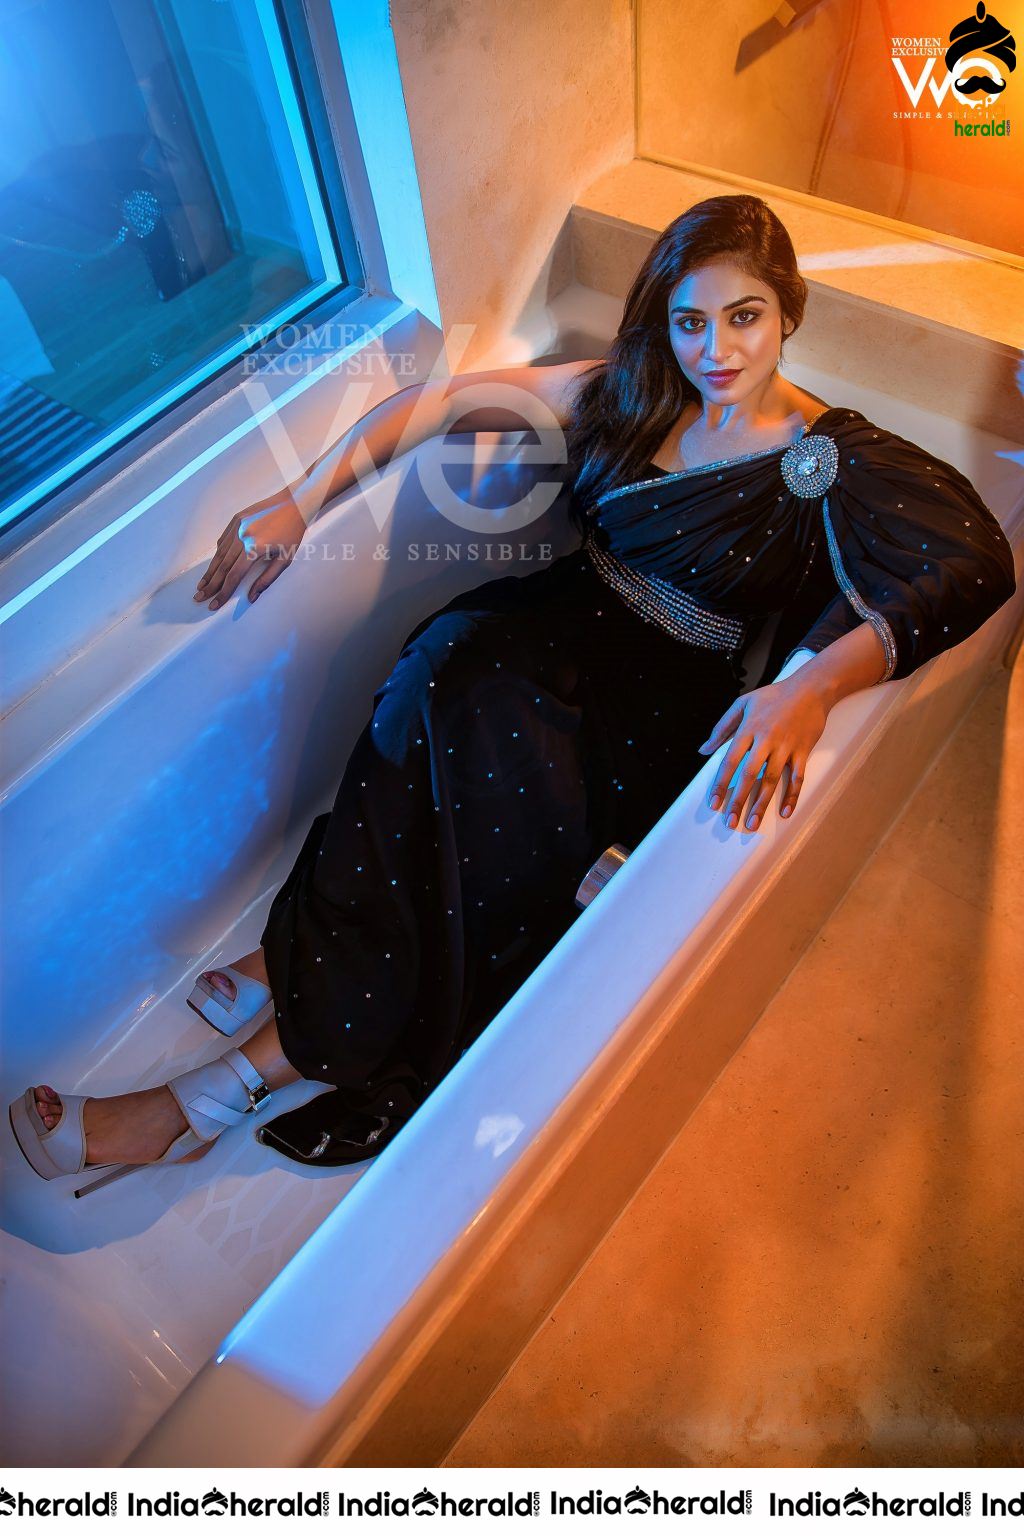 Indhuja Ravichandran Photoshoot for WE Magazine Set 2